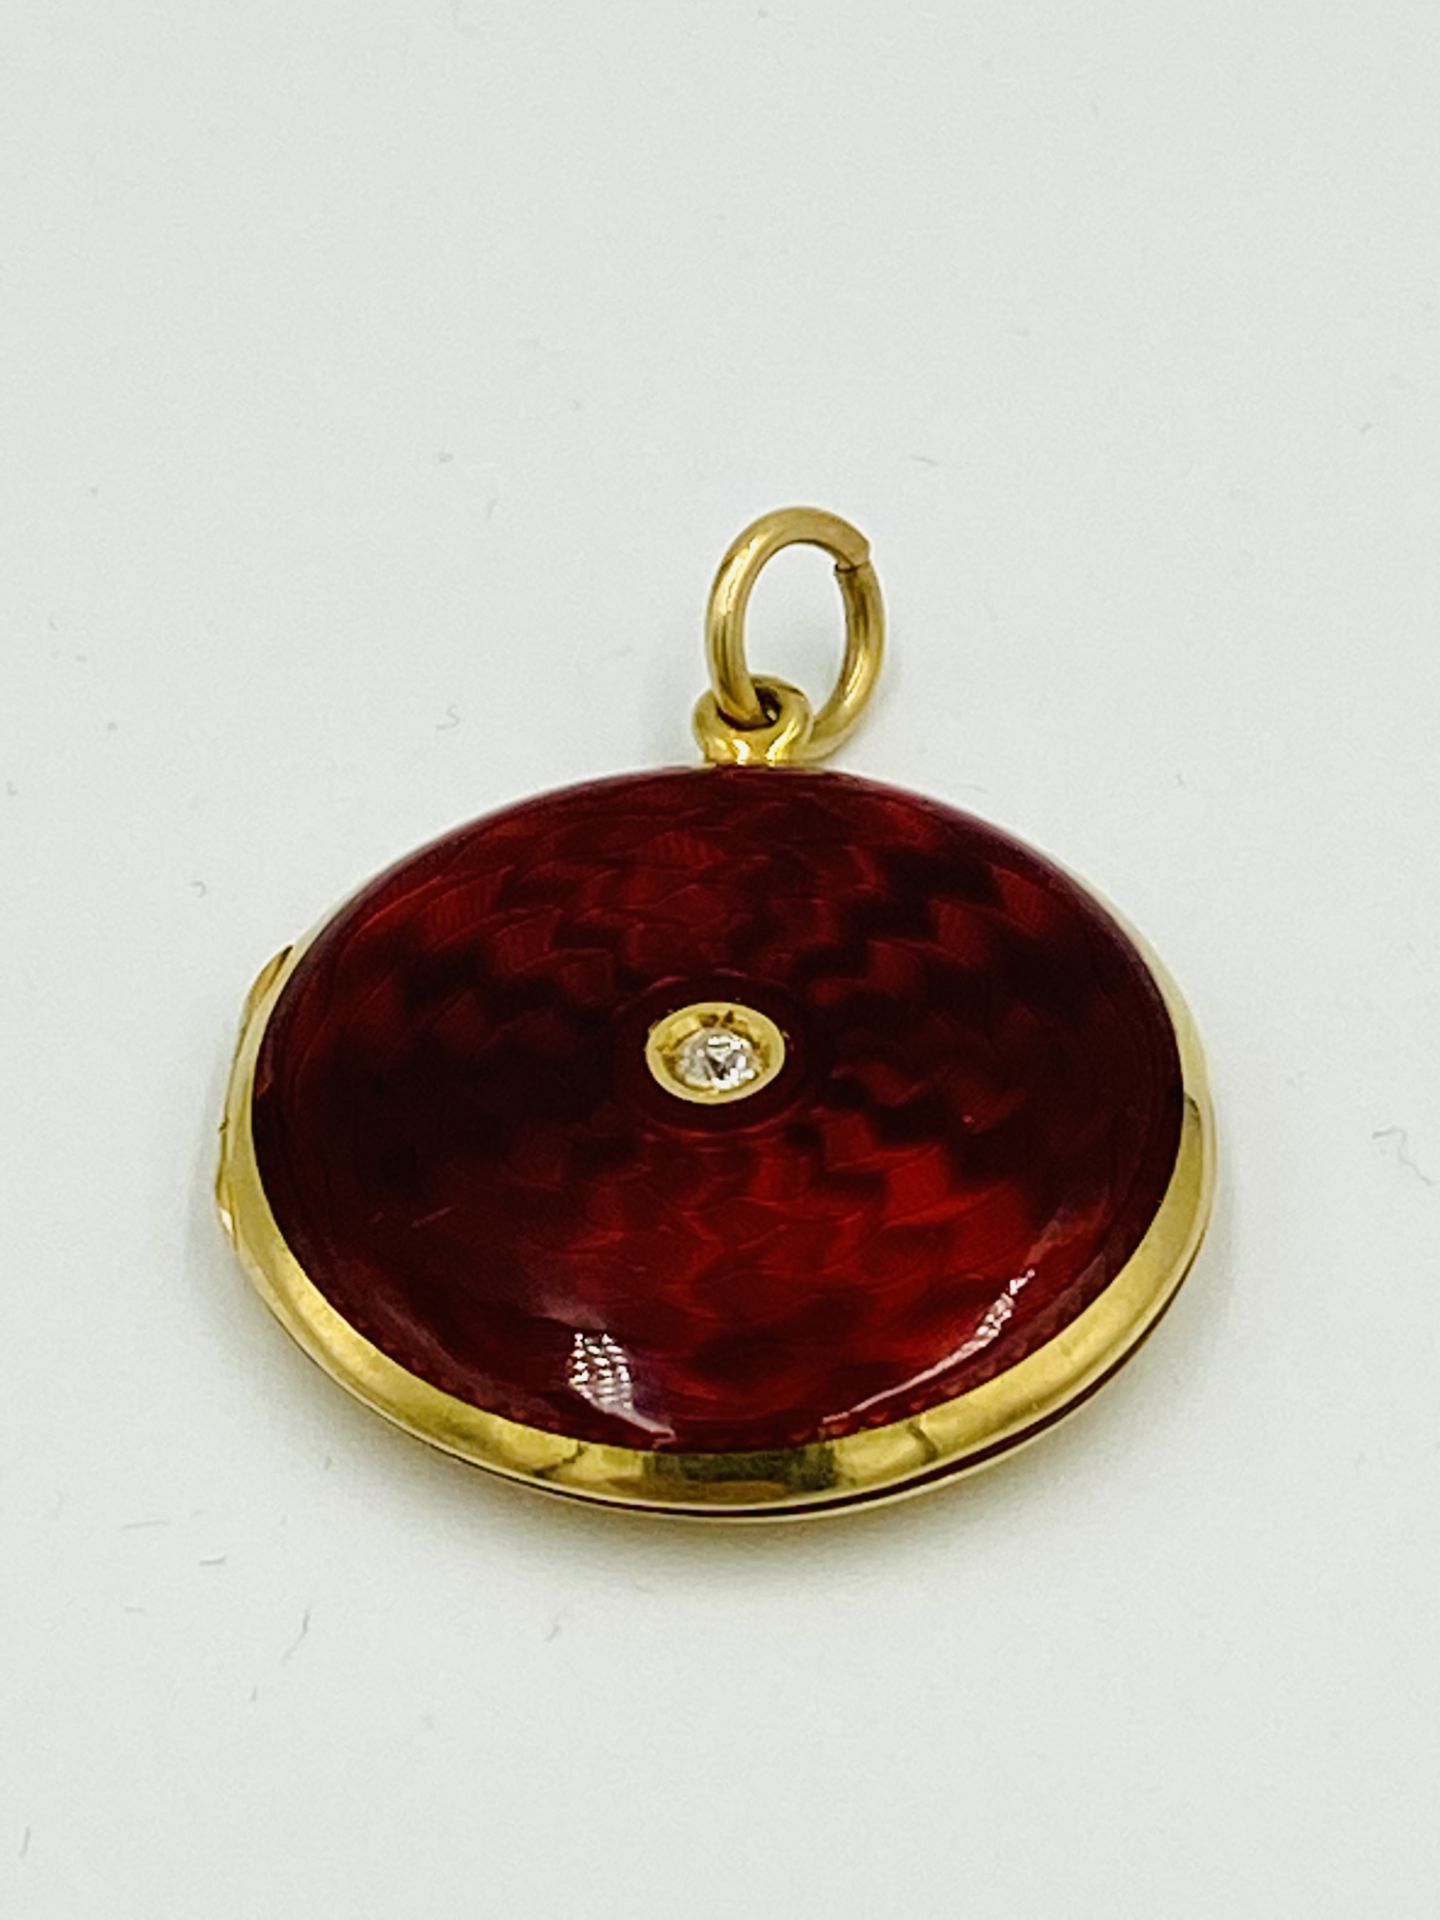 18ct, diamond and enamel locket/pendant